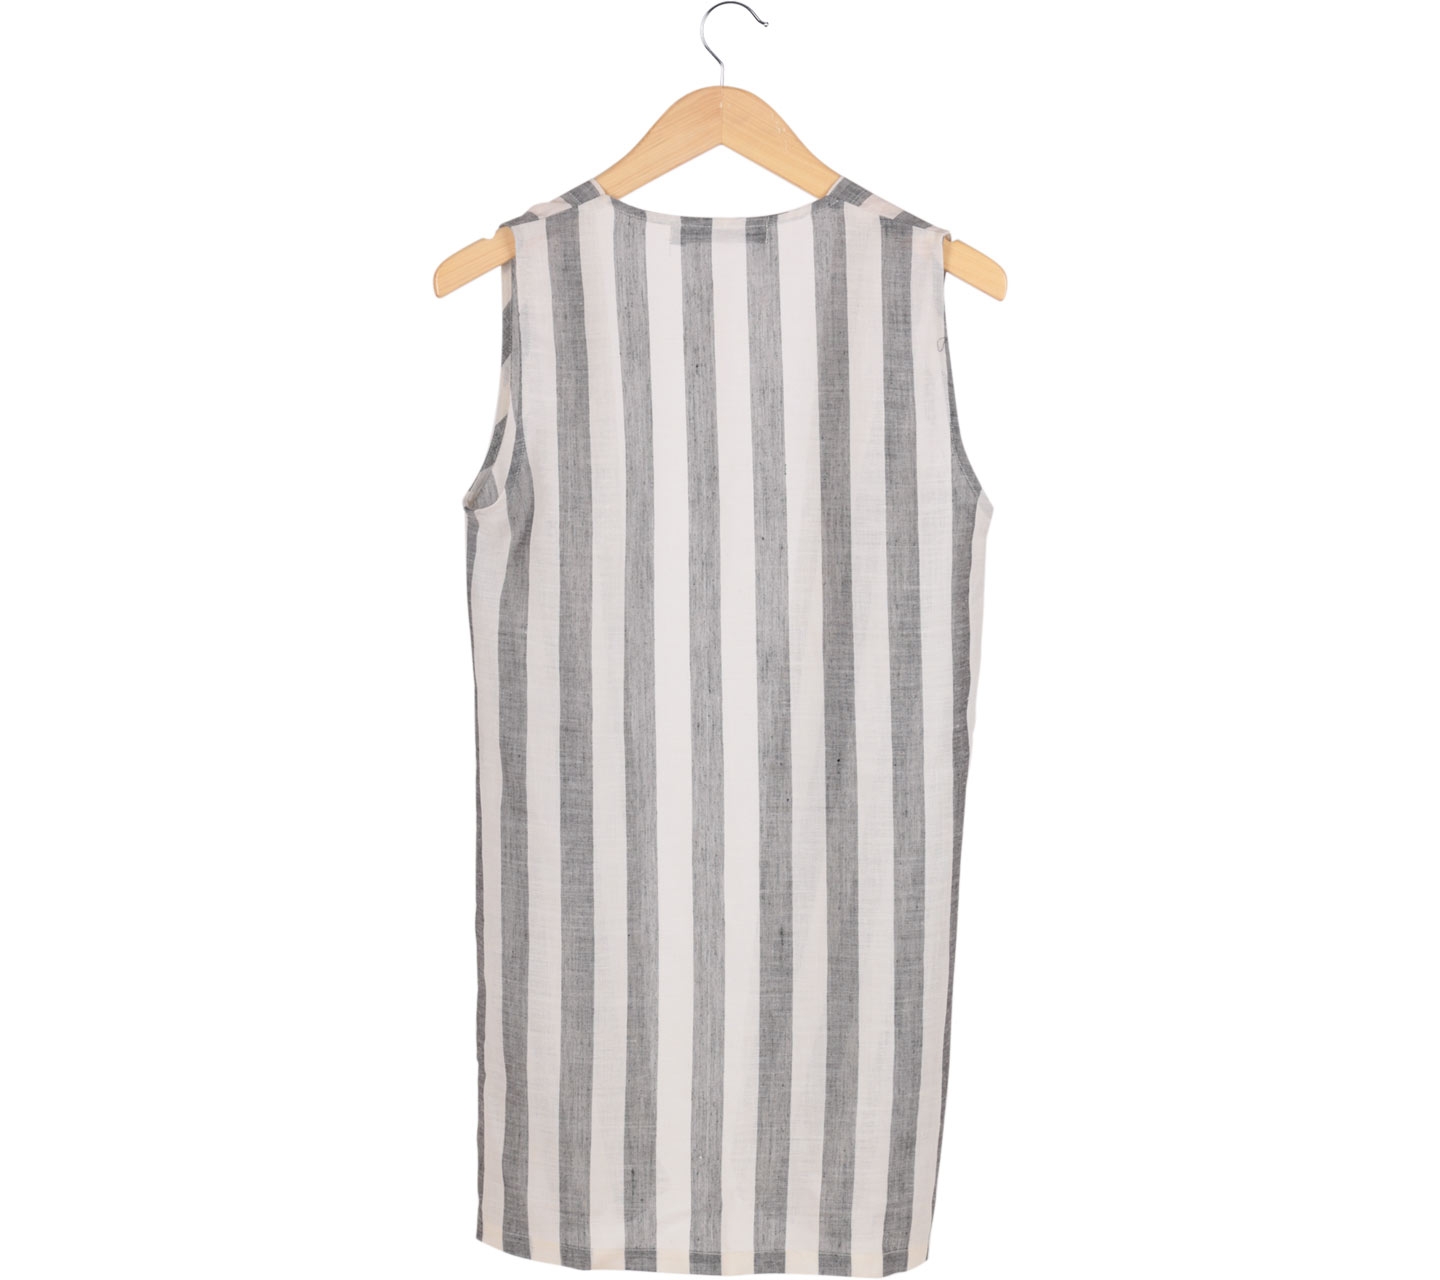 Bambina Closet Grey And Off White Striped Vest